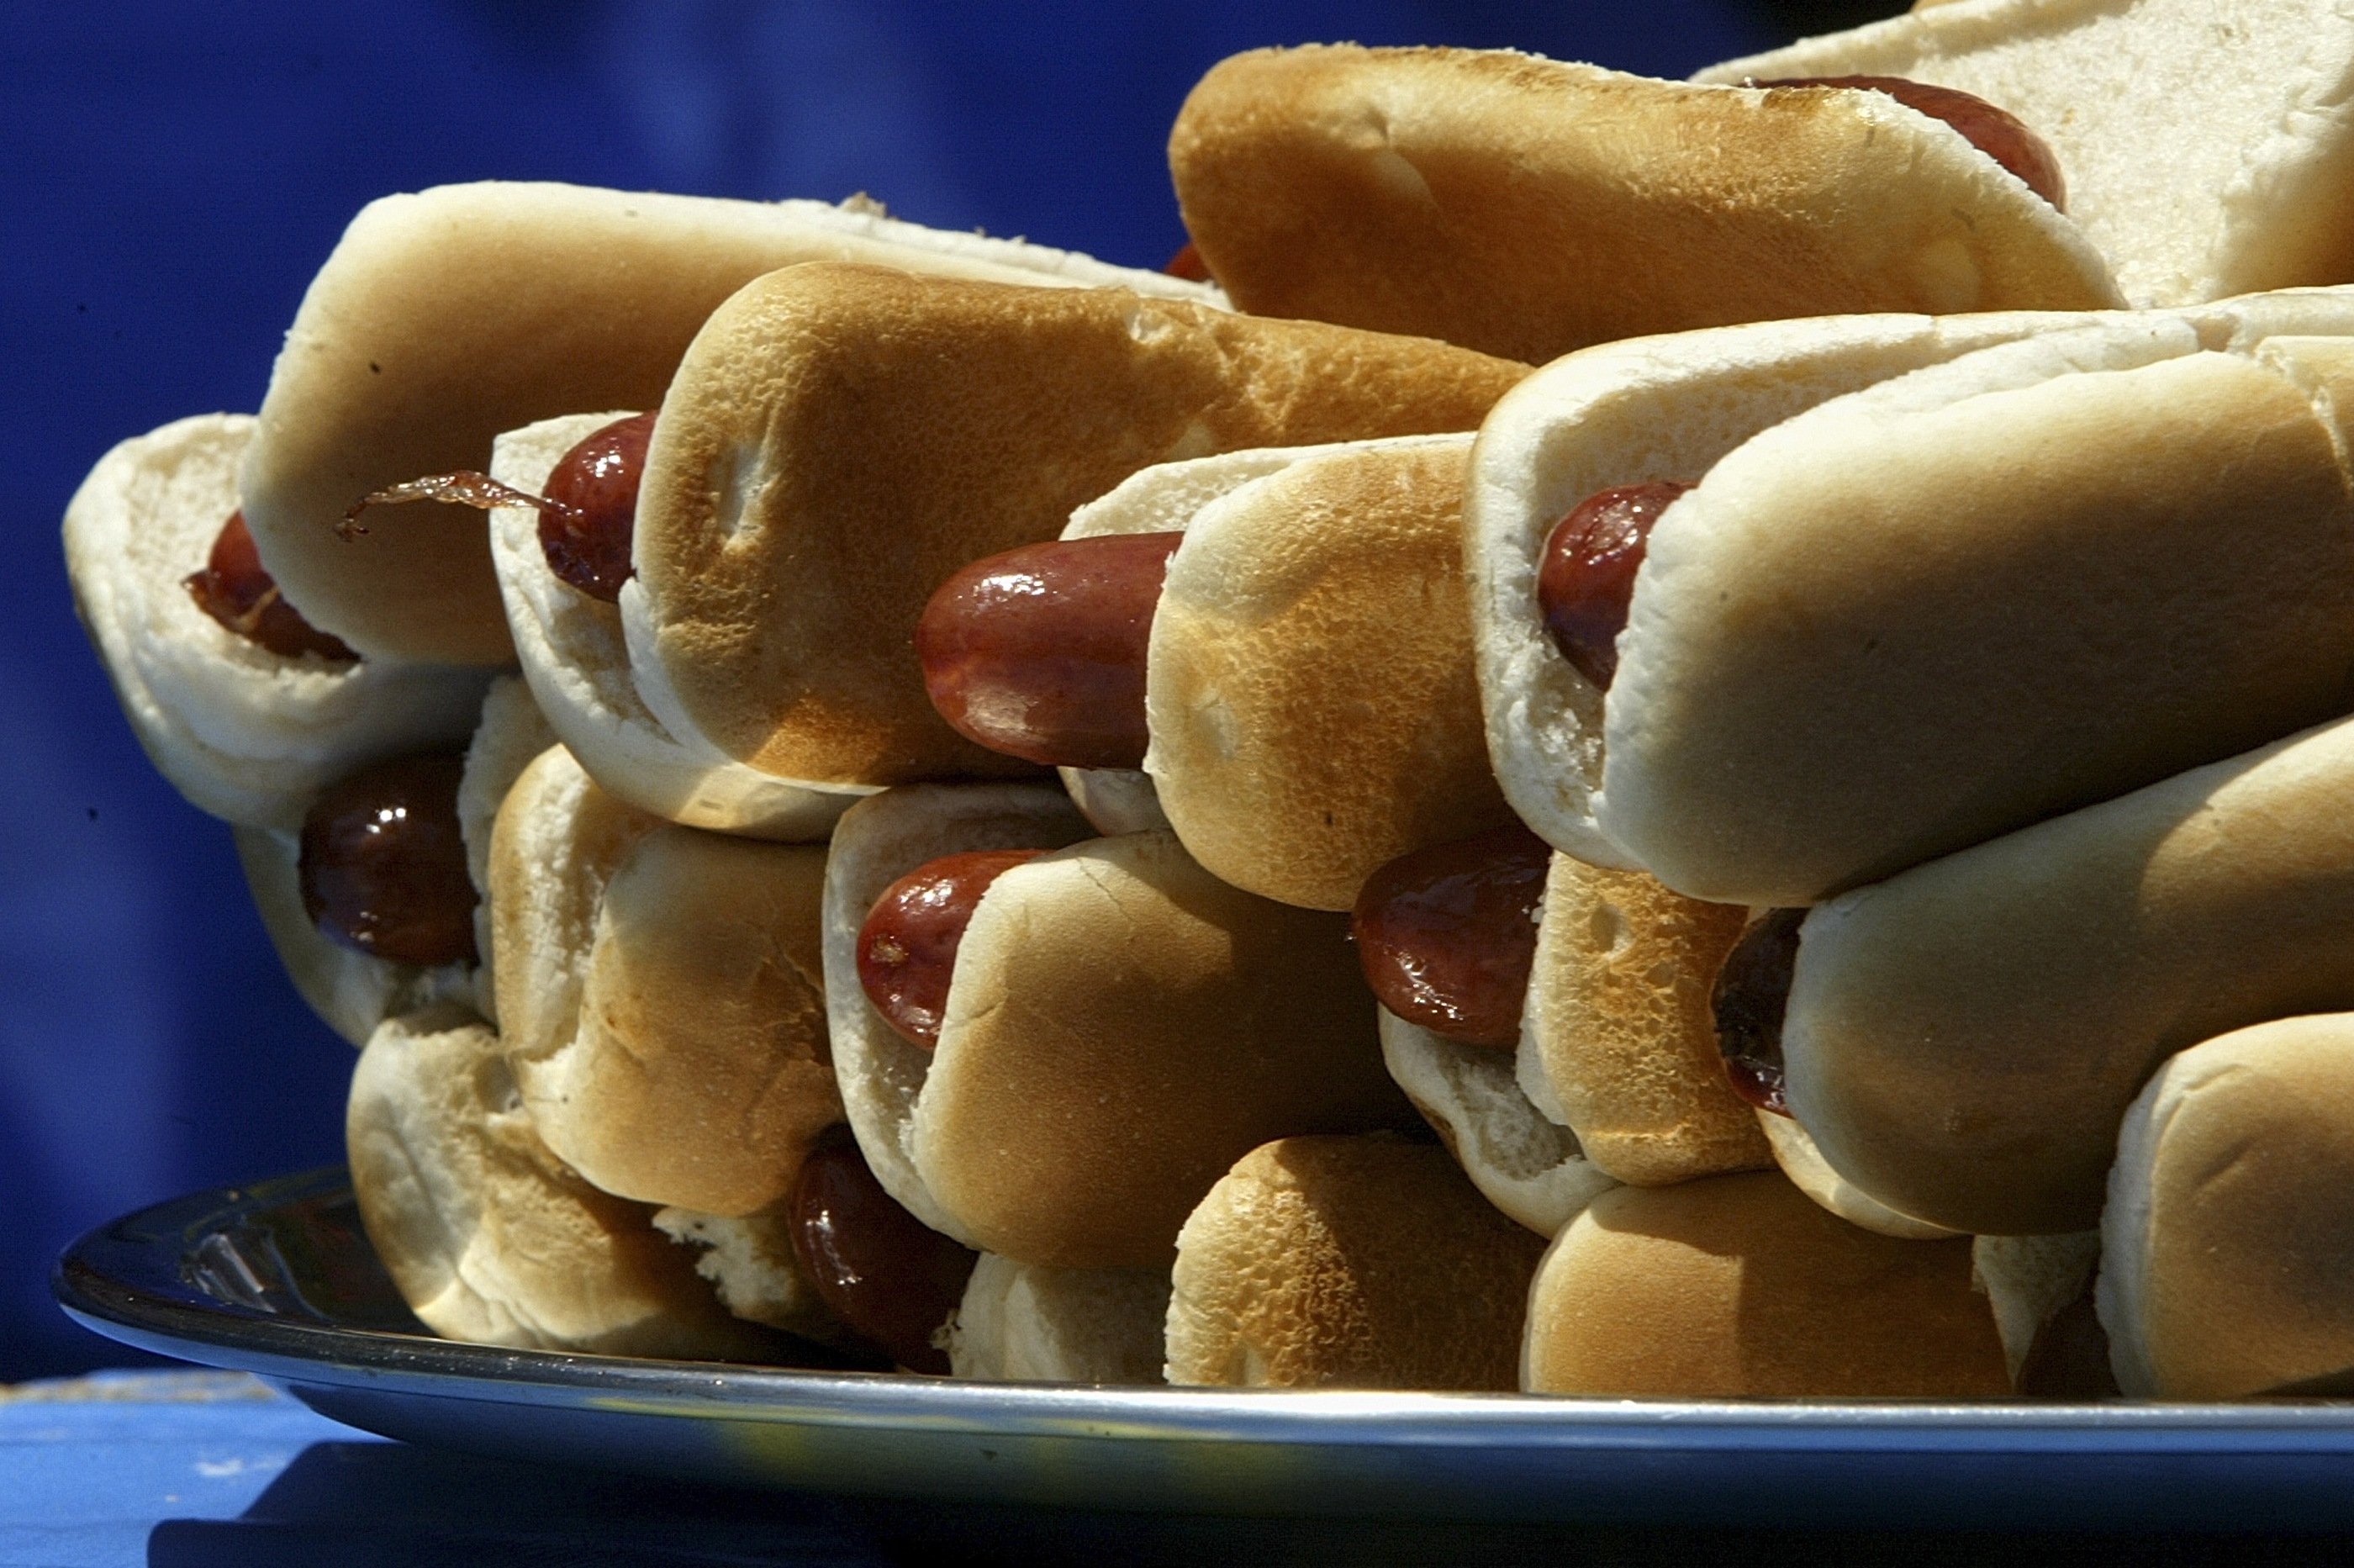 Hot dog eating contest regular show information Trending